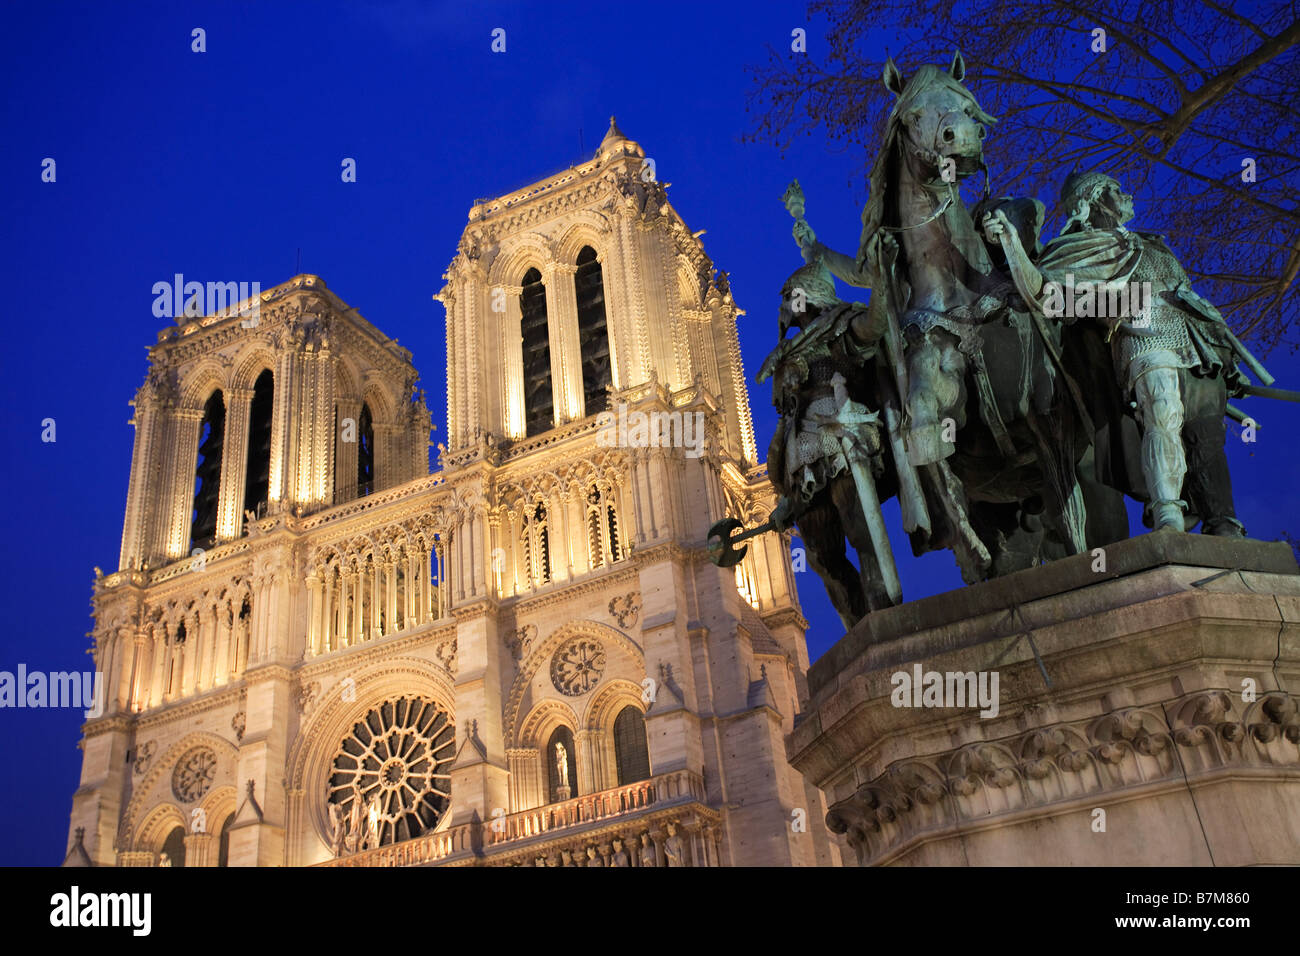 Cattedrale di NOTRE DAME DE PARIS DI NOTTE Foto Stock